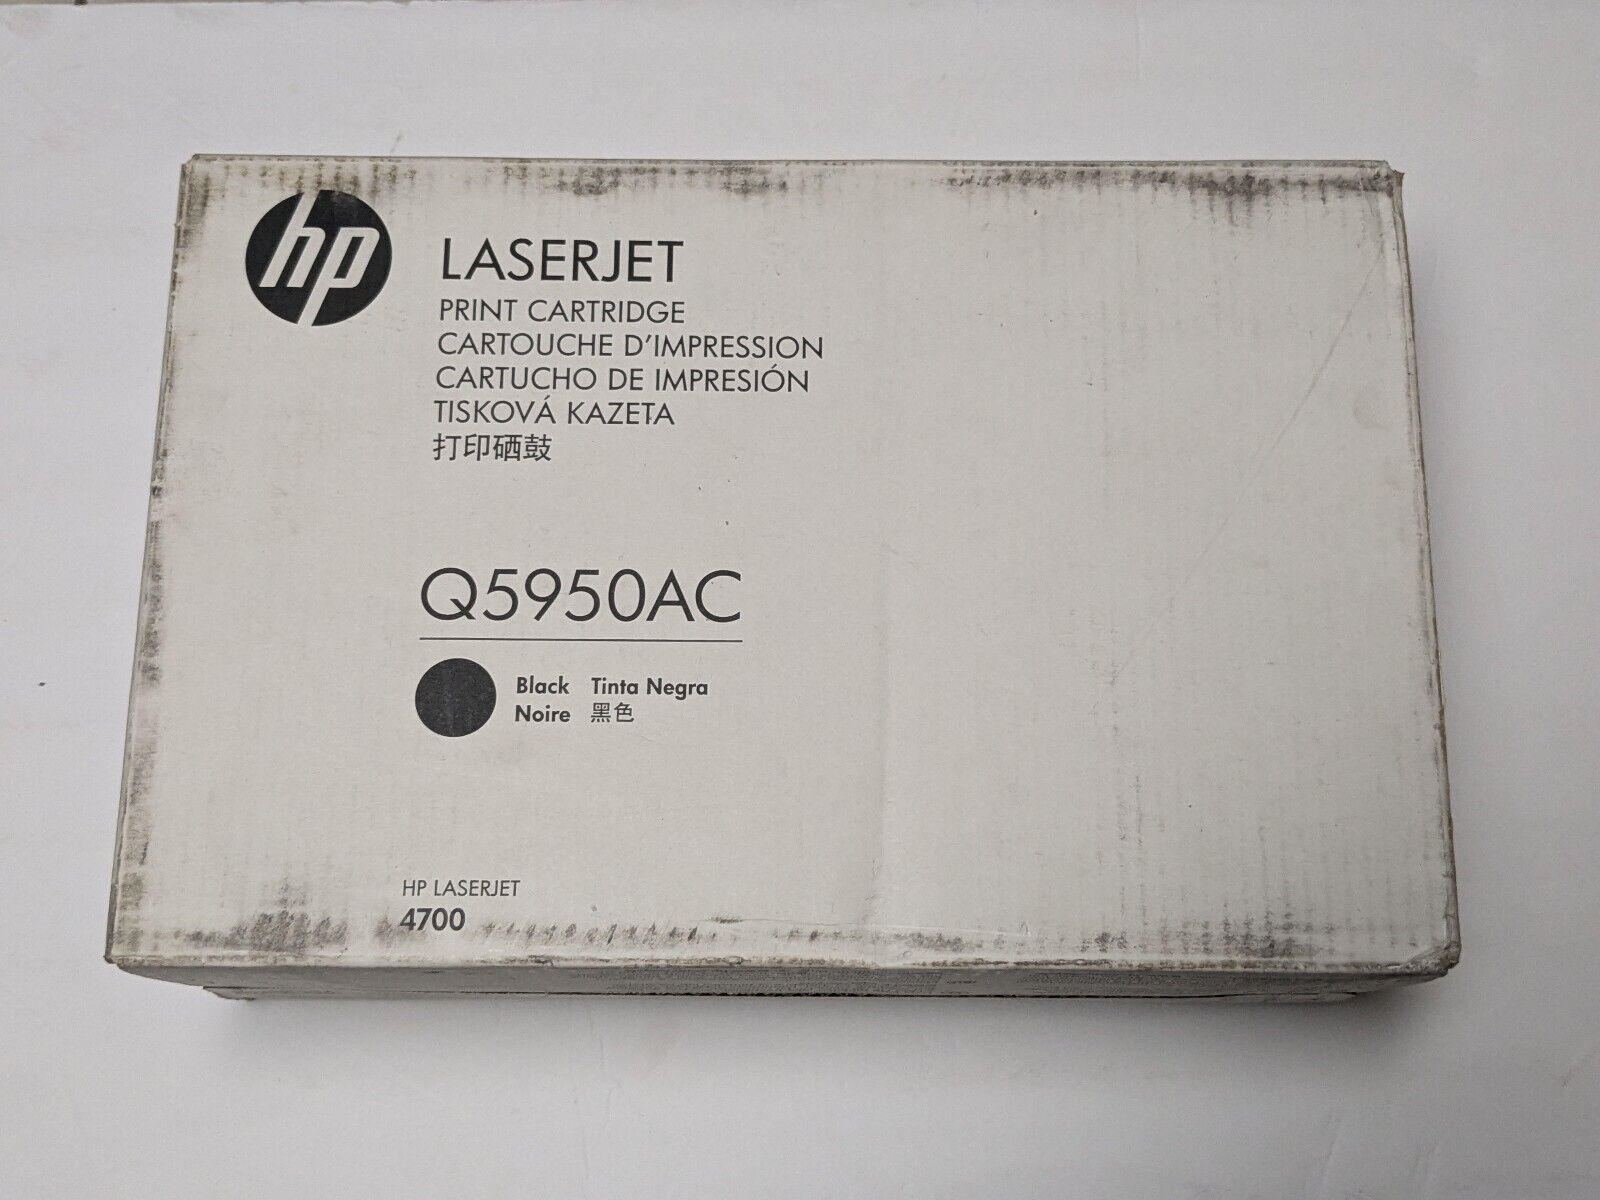 New Genuine OEM HP Q5950AC Black Toner Q5950AC Q5950-00905 LaserJet 4700